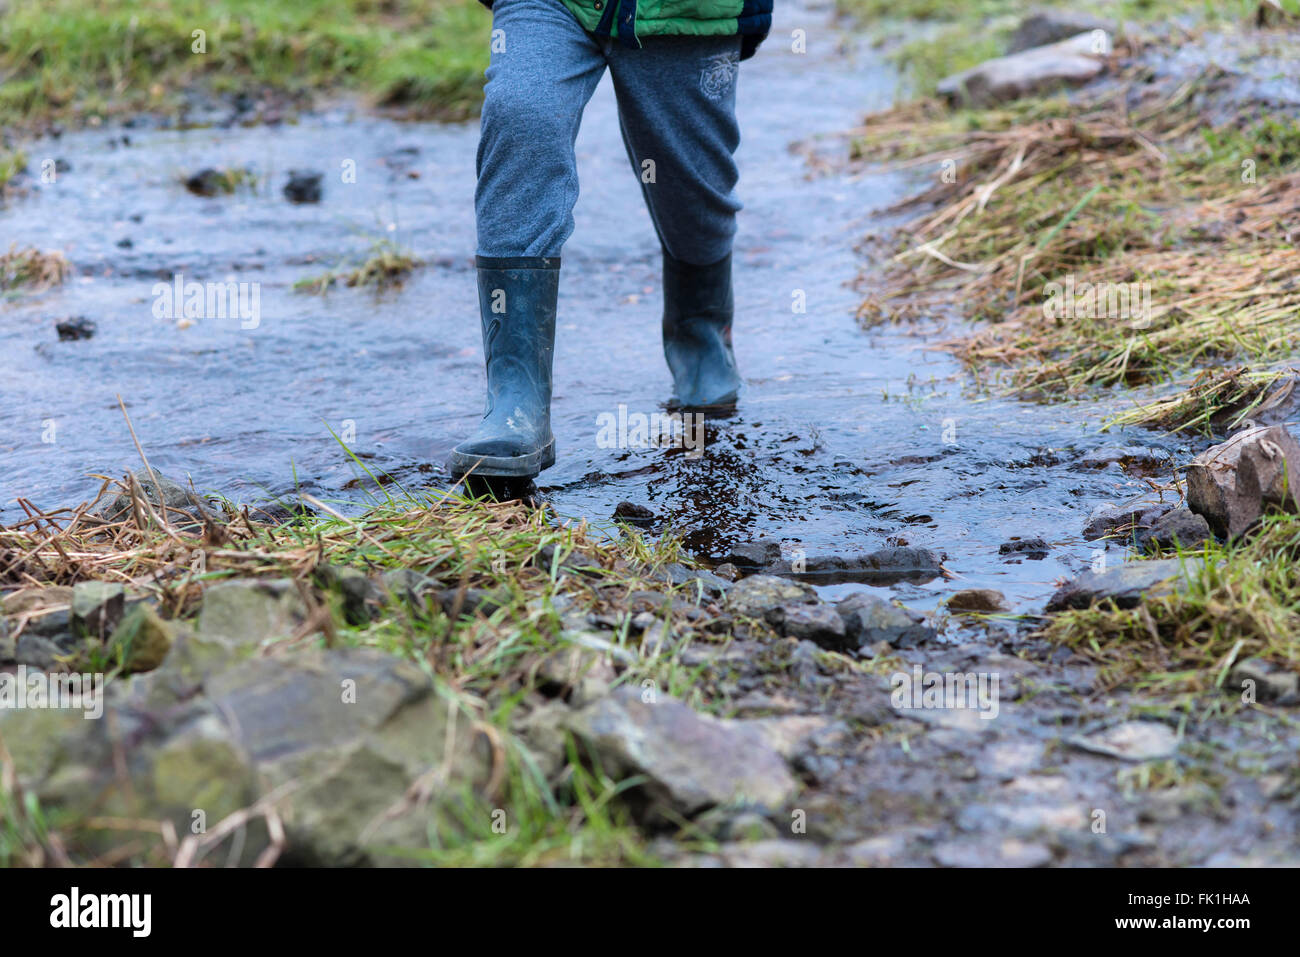 Child walking through stream with wellies on Stock Photo